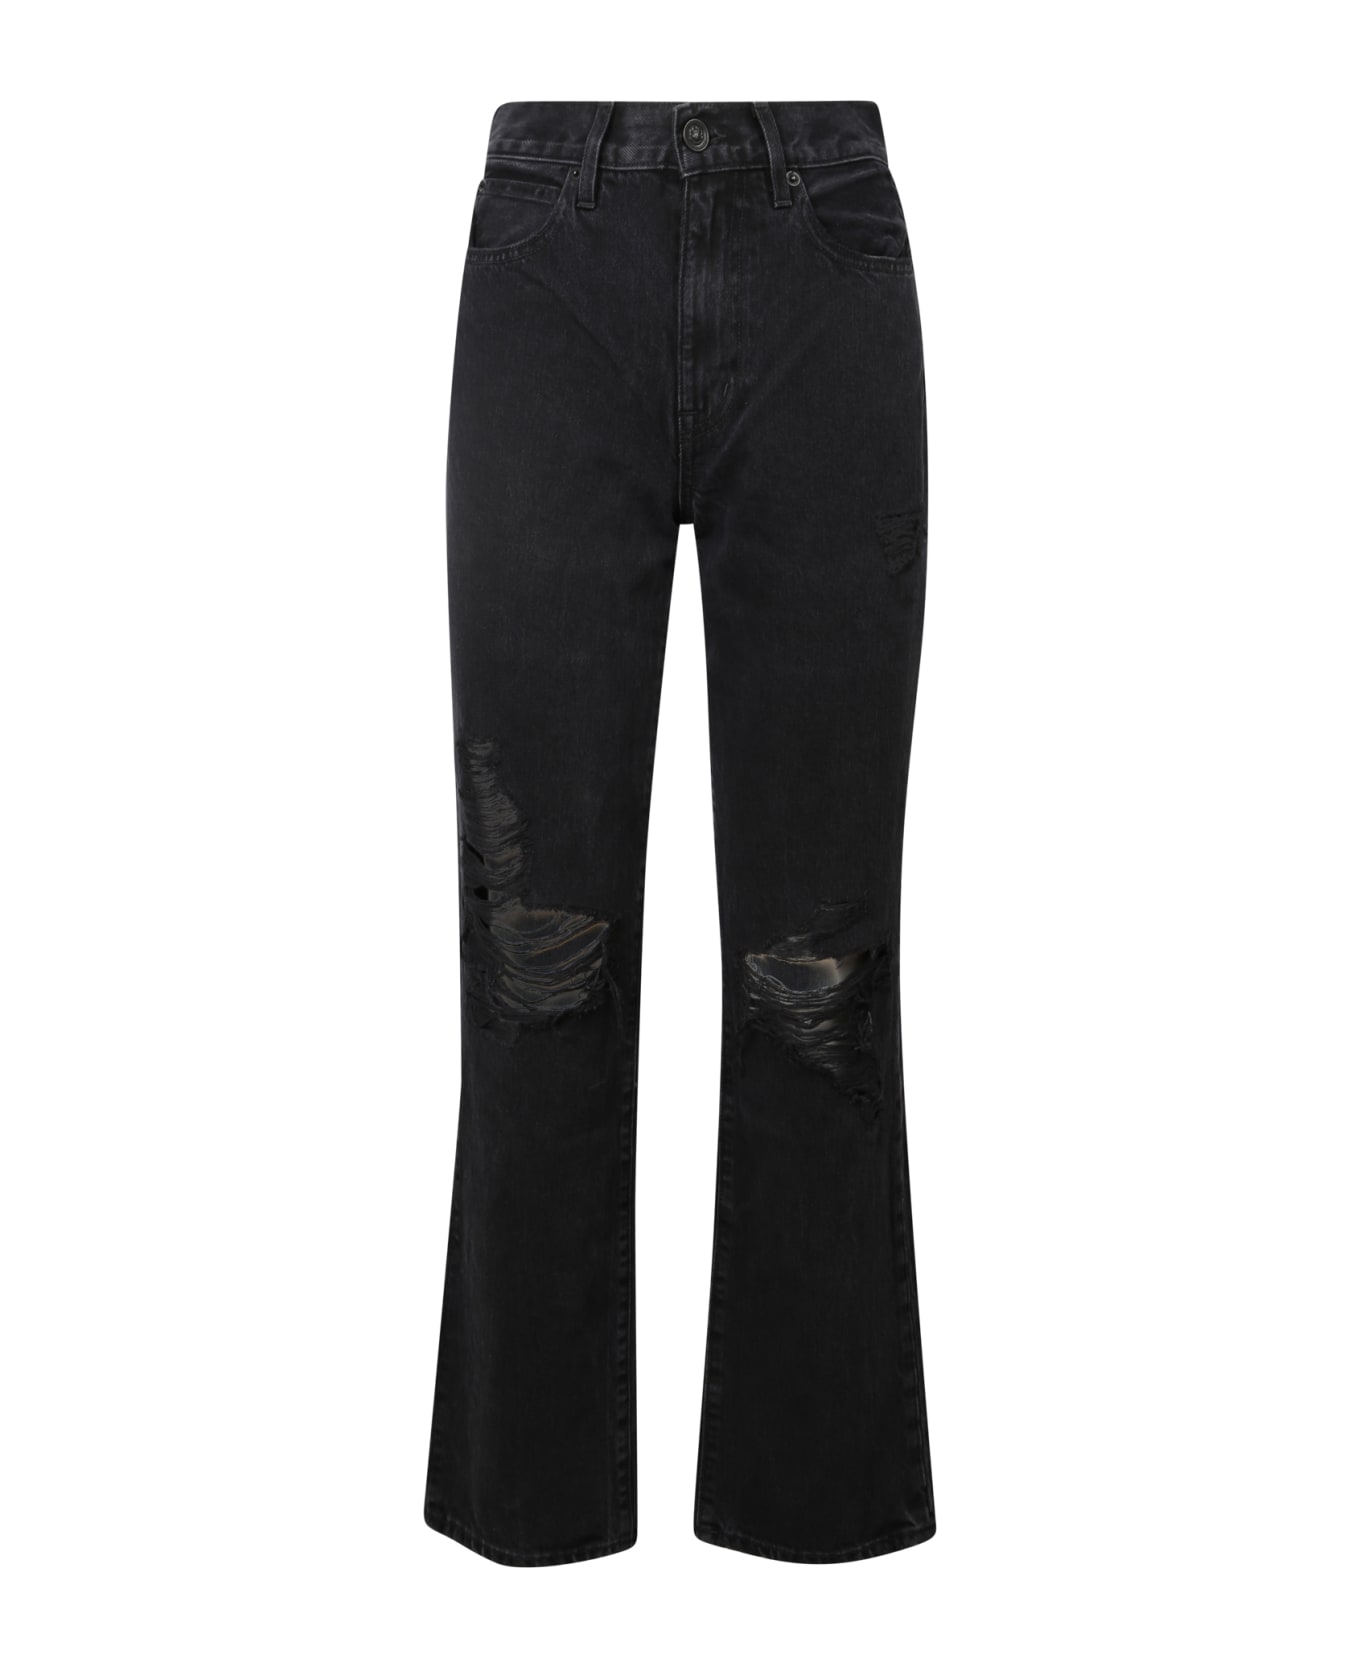 SLVRLAKE Jeans London Straight - Black デニム